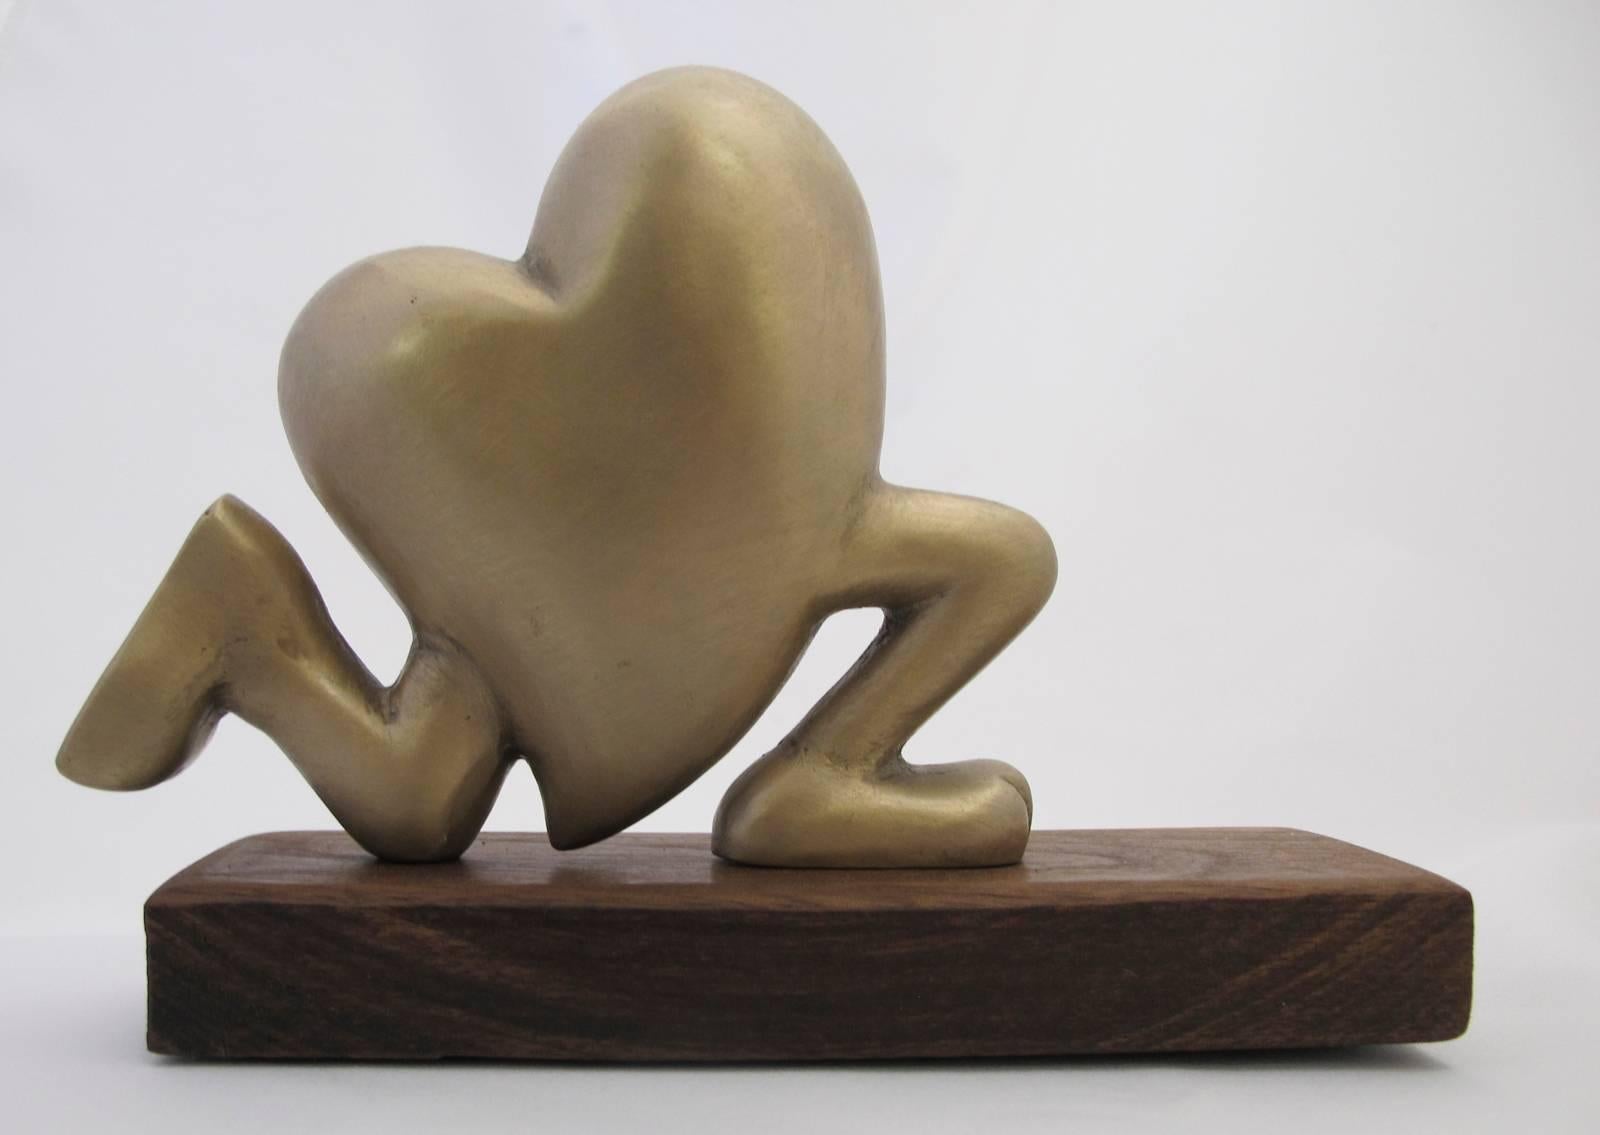 Running Heart, gold, bronze, sculpture Valentine heart shoes cartoon humor love